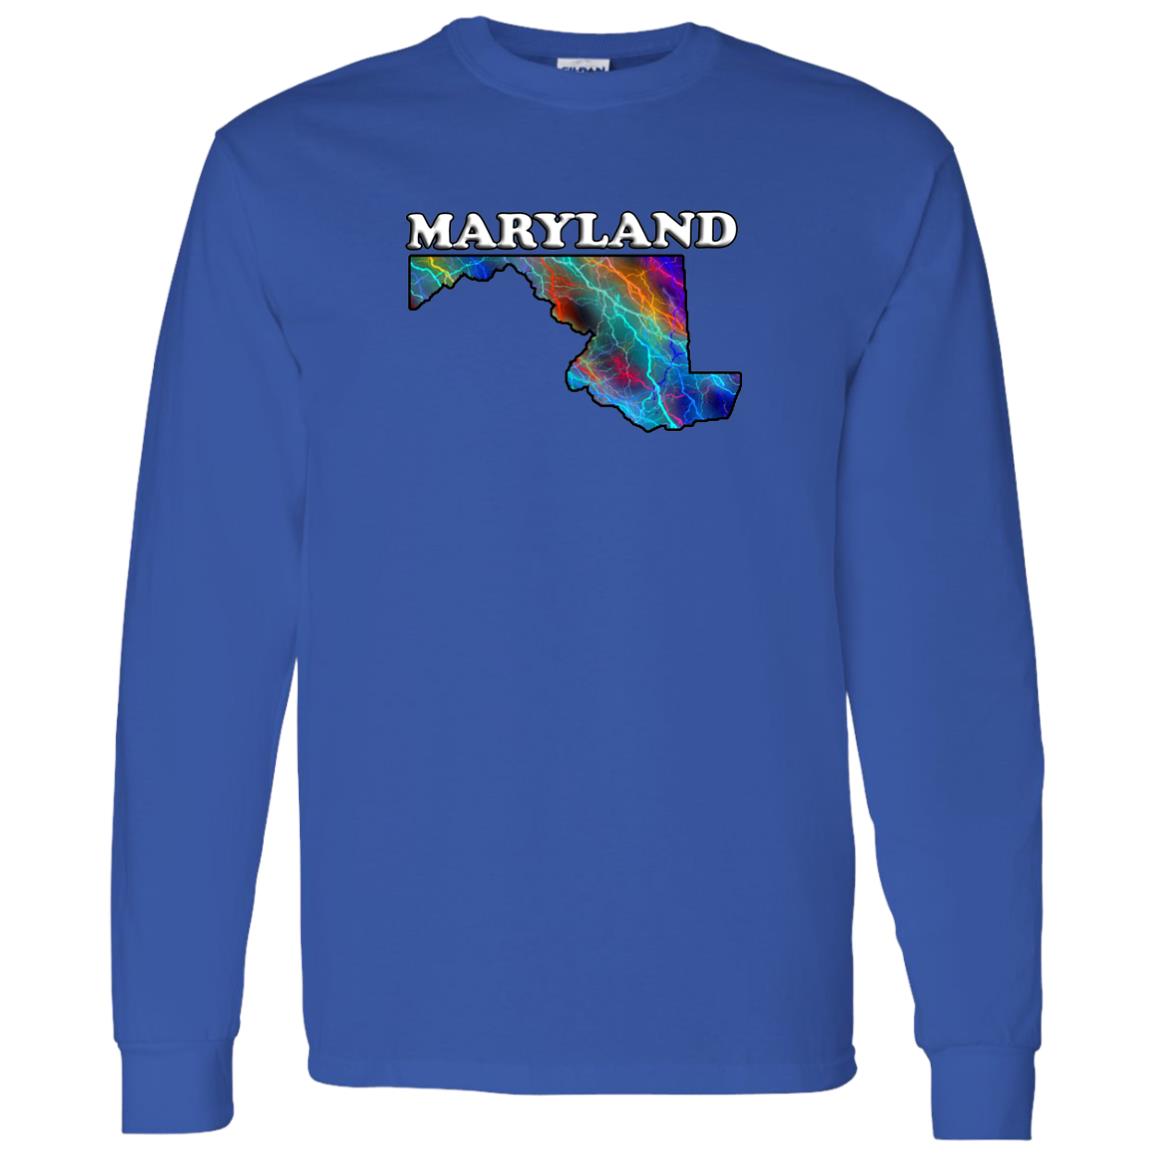 Maryland Long Sleeve T-shirt